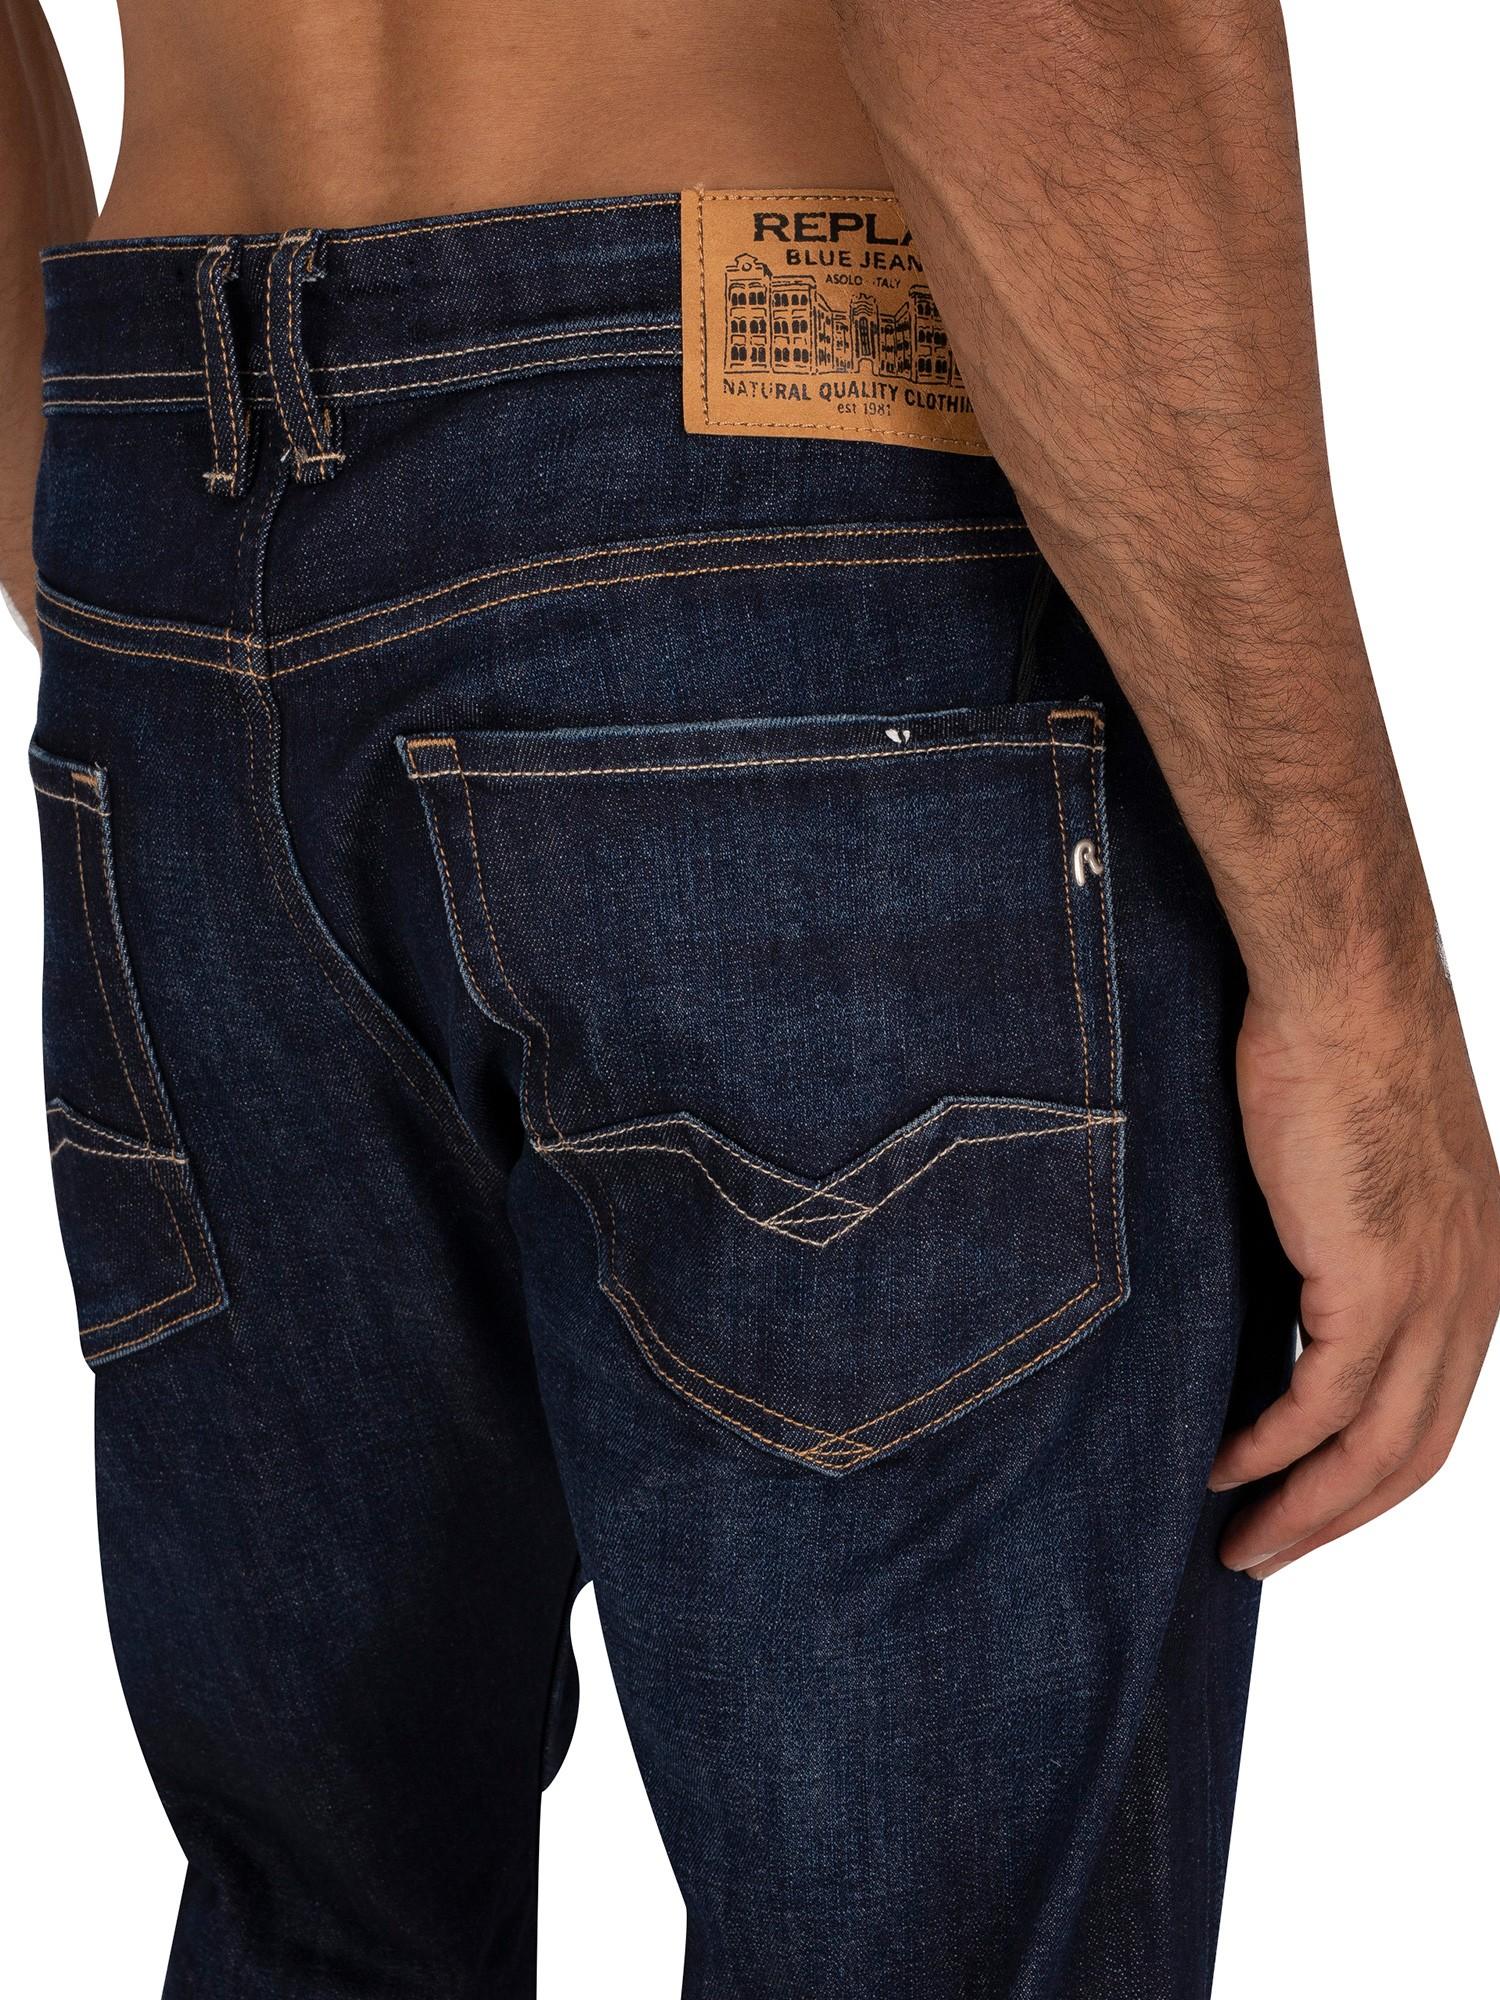 Replay Denim Rocco Comfort Jeans in Indigo (Blue) for Men - Lyst